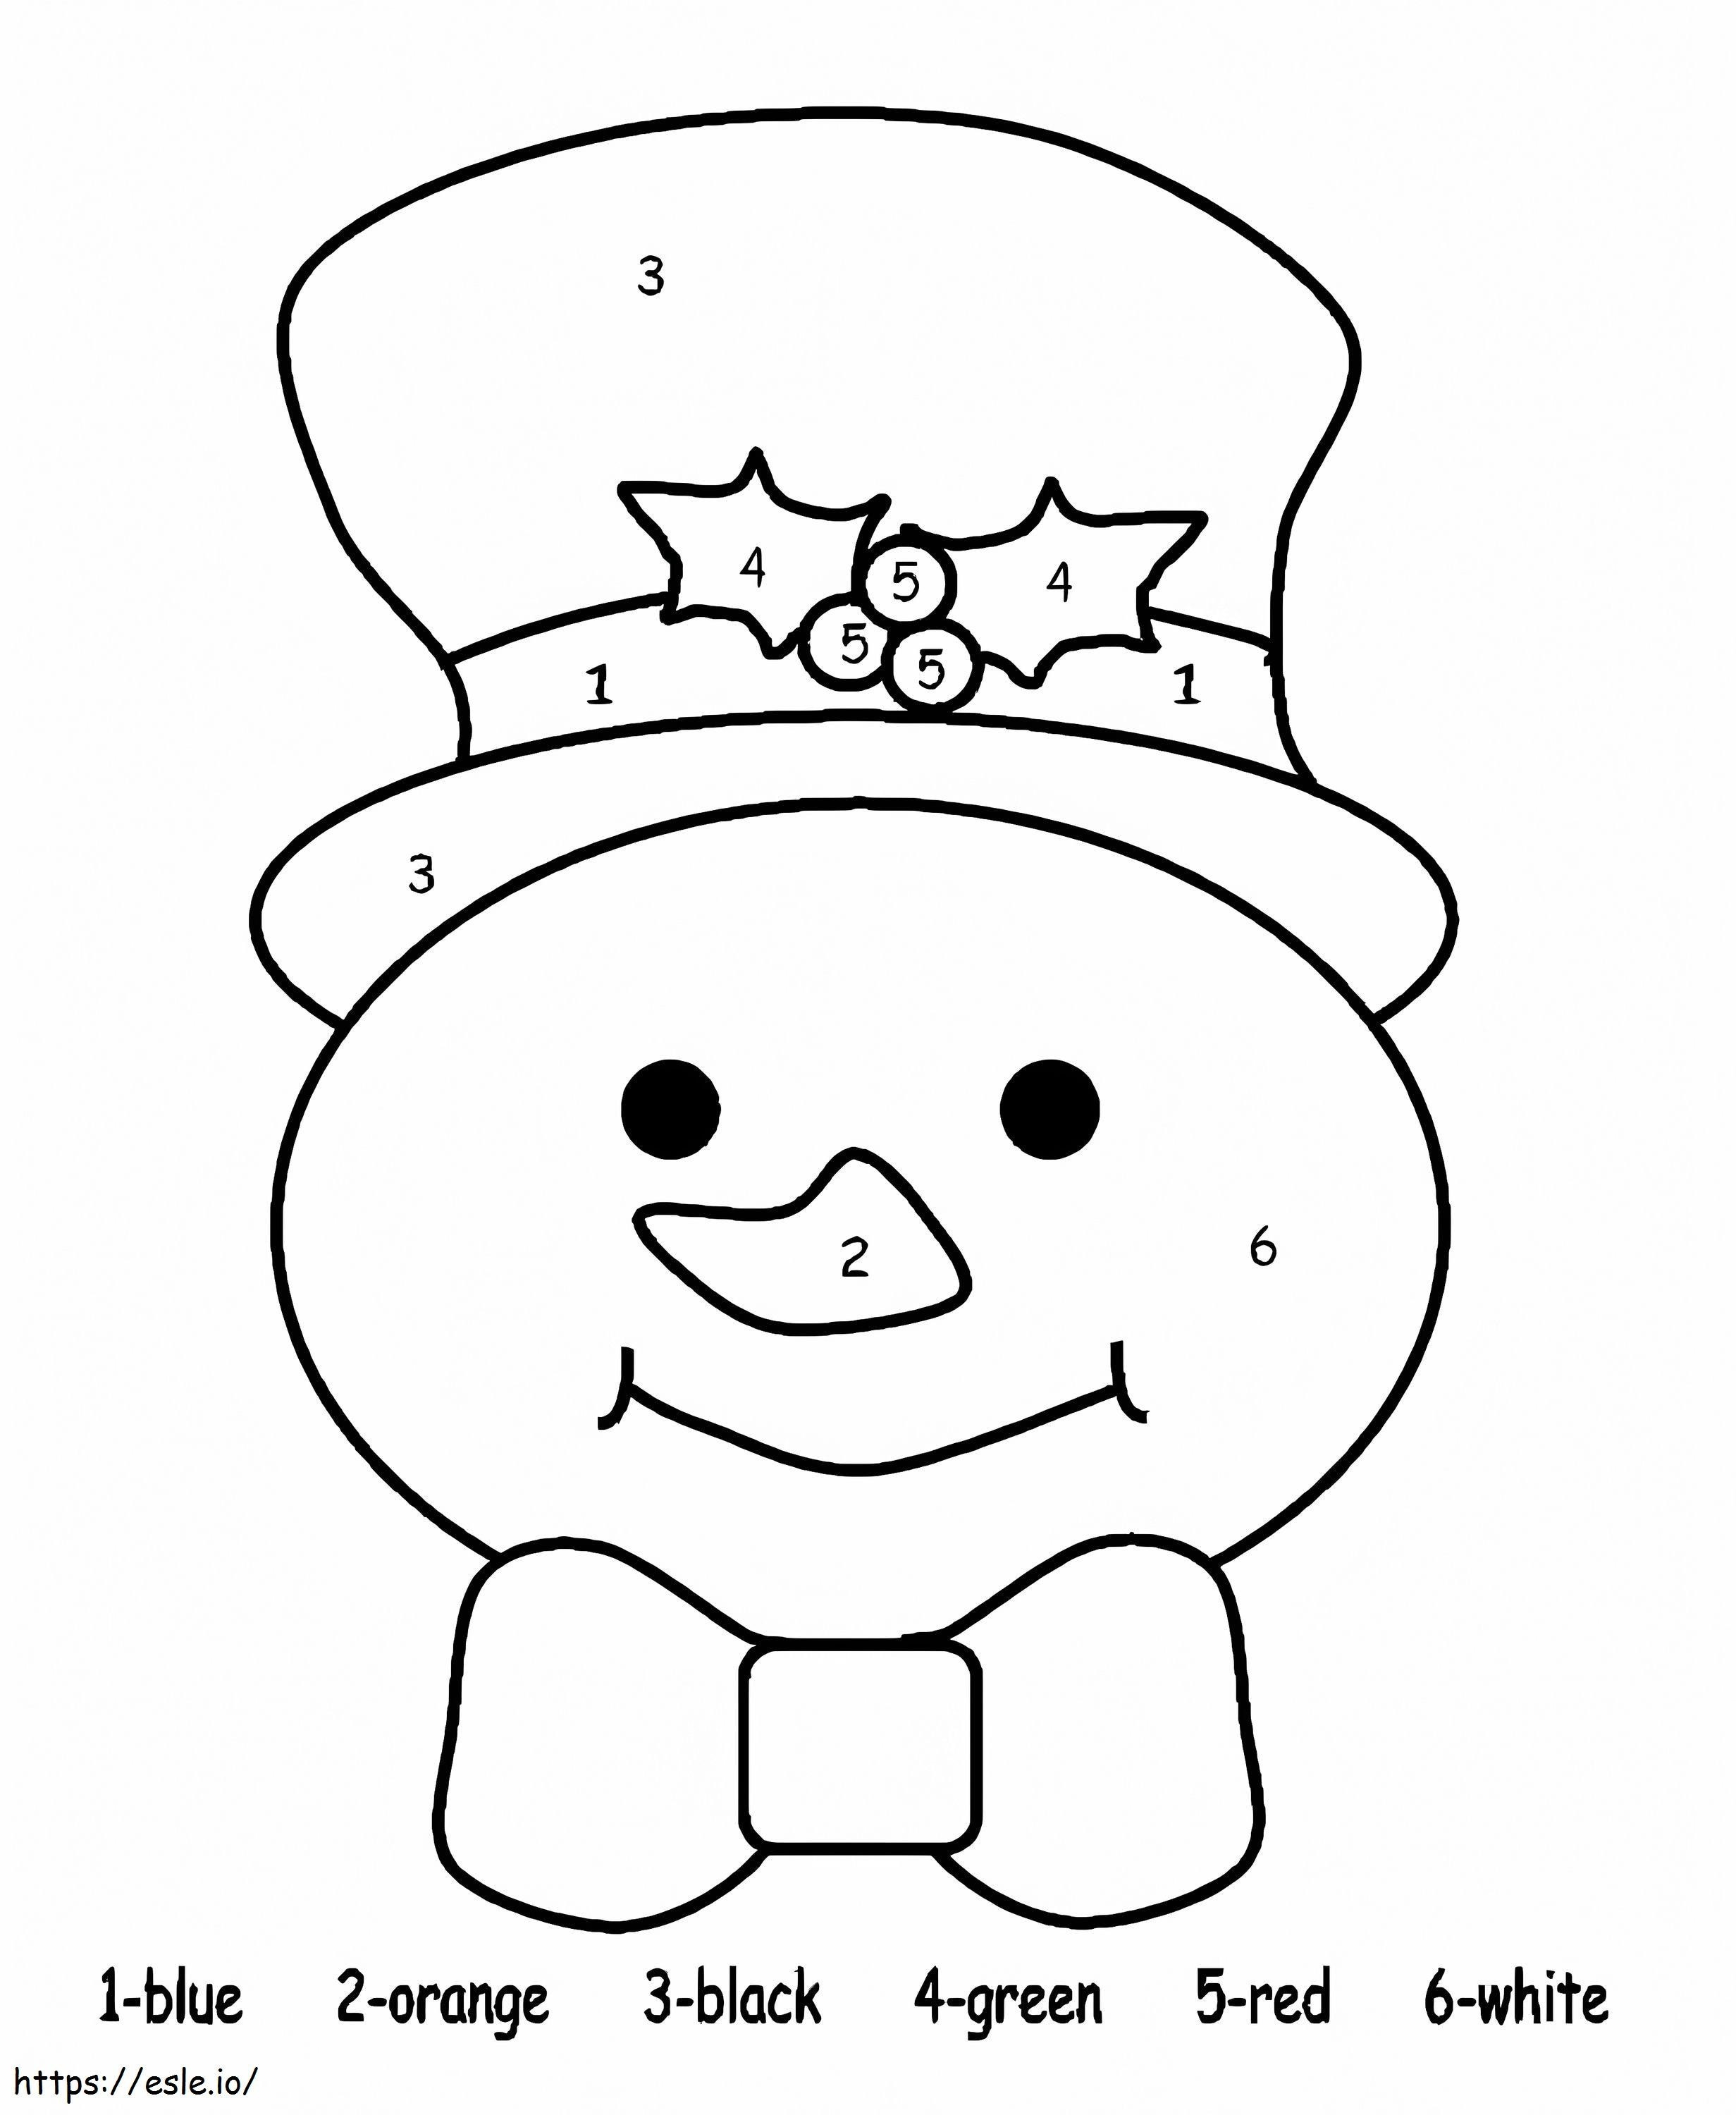 Cor fácil do boneco de neve por número para colorir